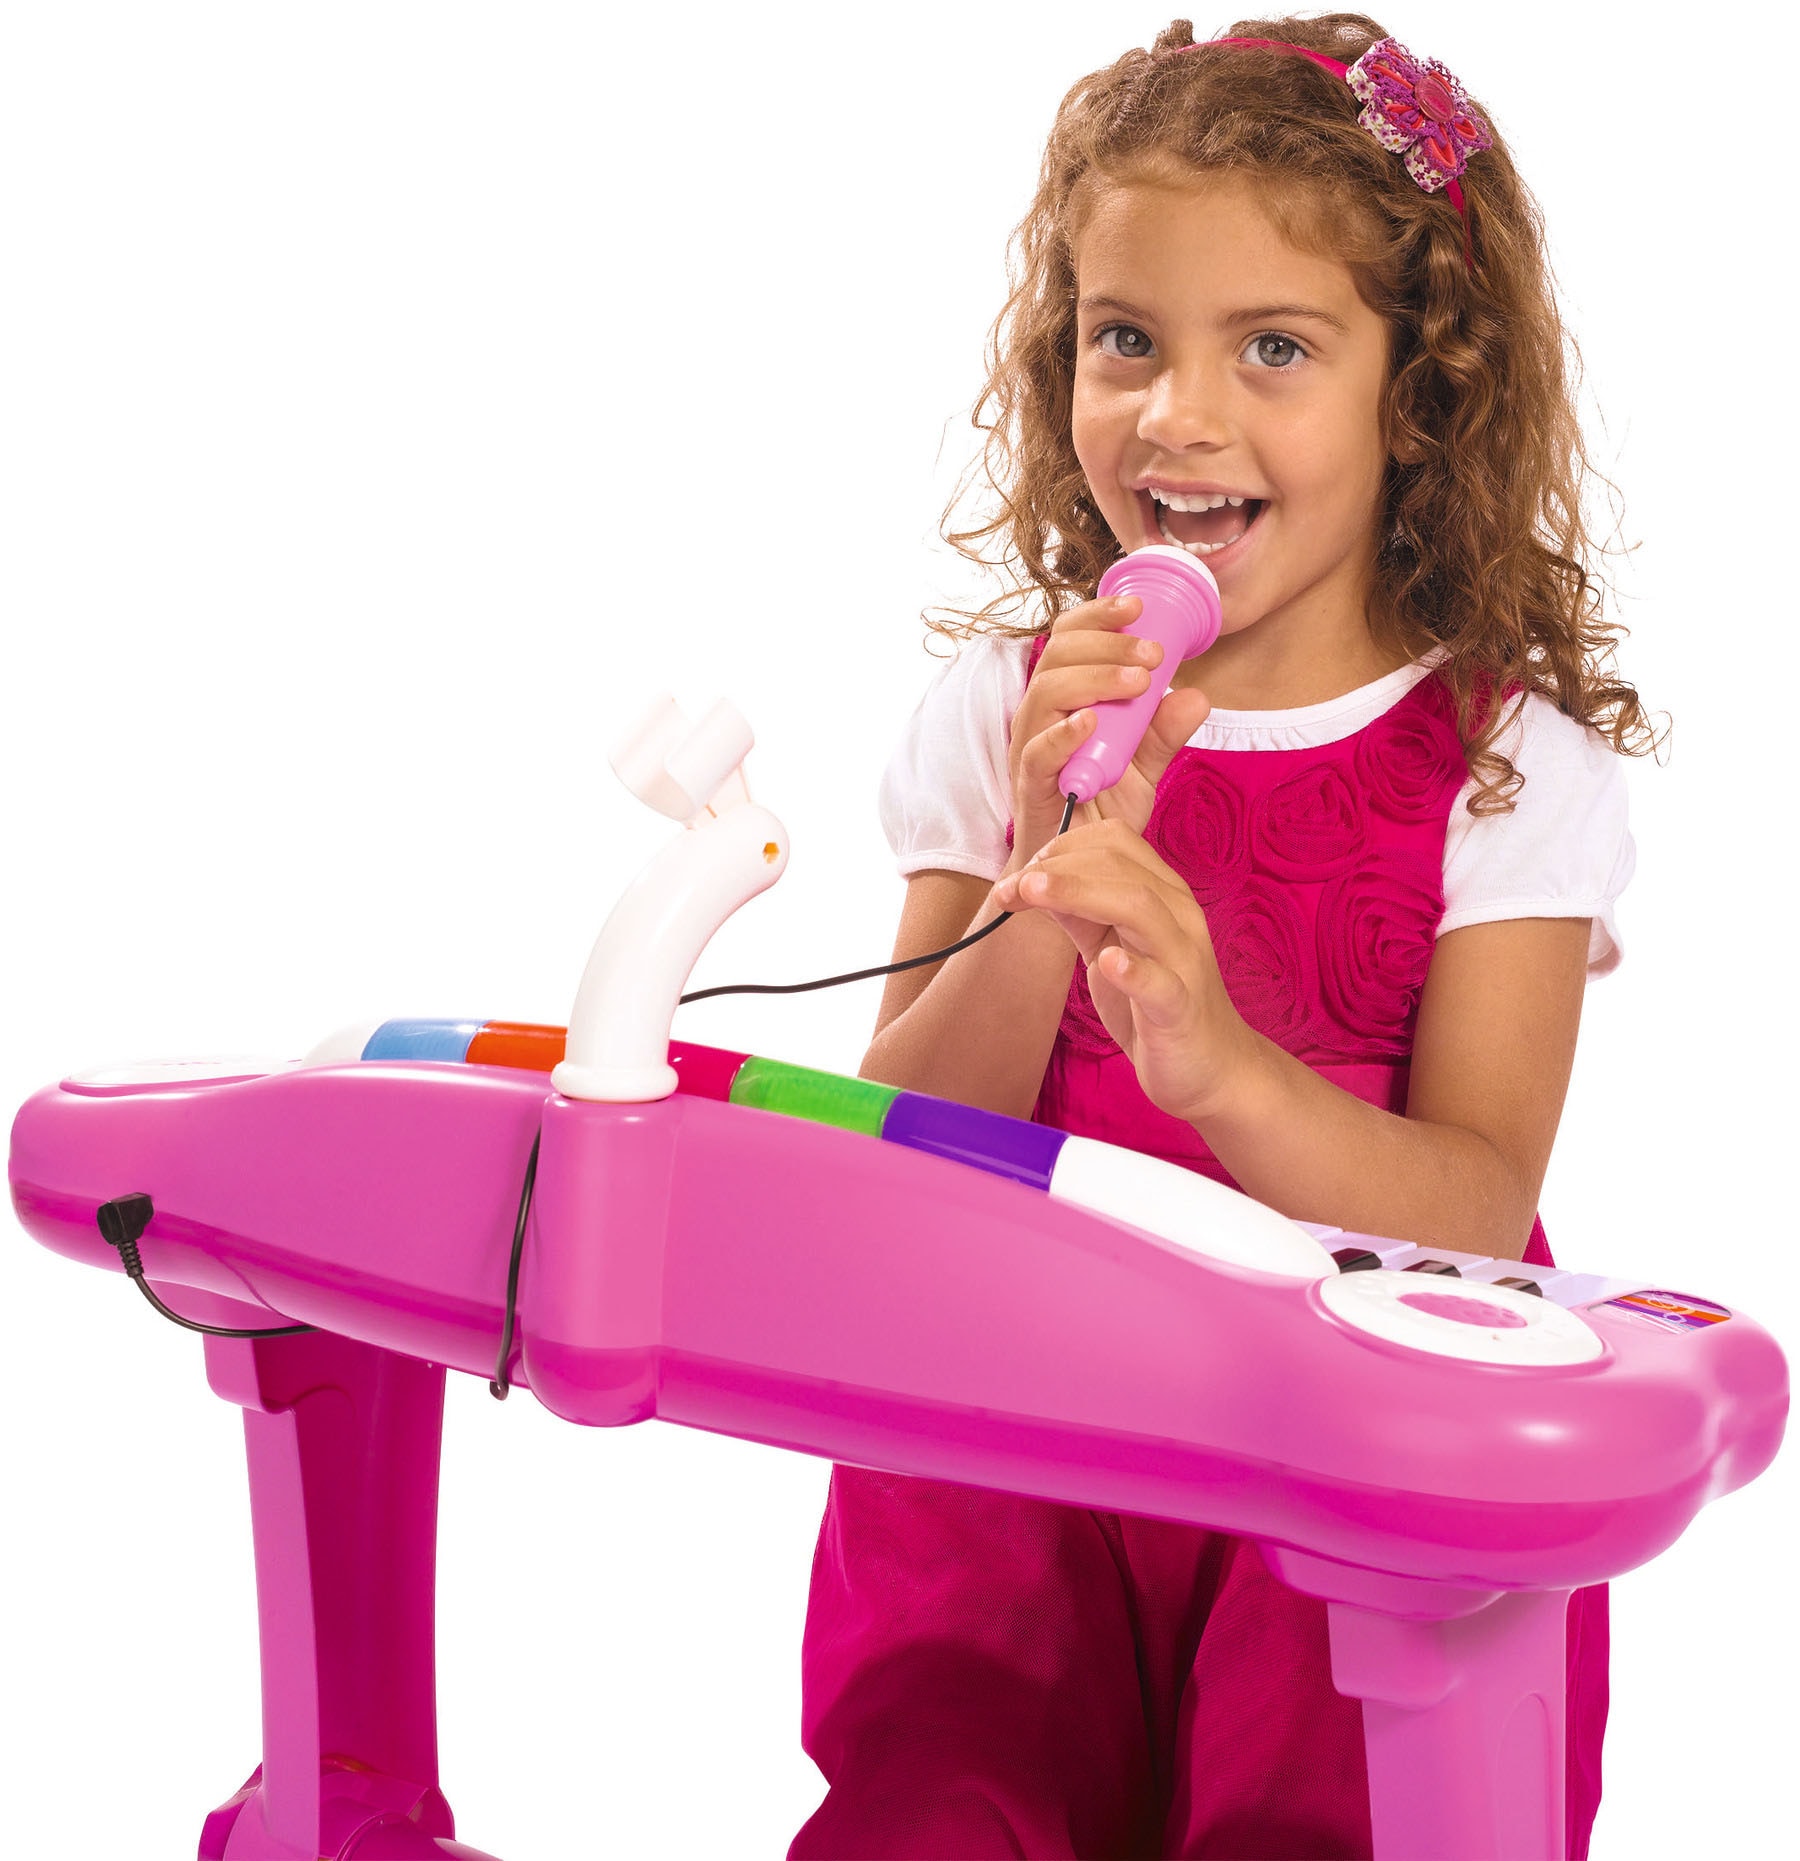 SIMBA Spielzeug-Musikinstrument »My Music World Keyboard, pink«, mit Hocker und Mikrofon